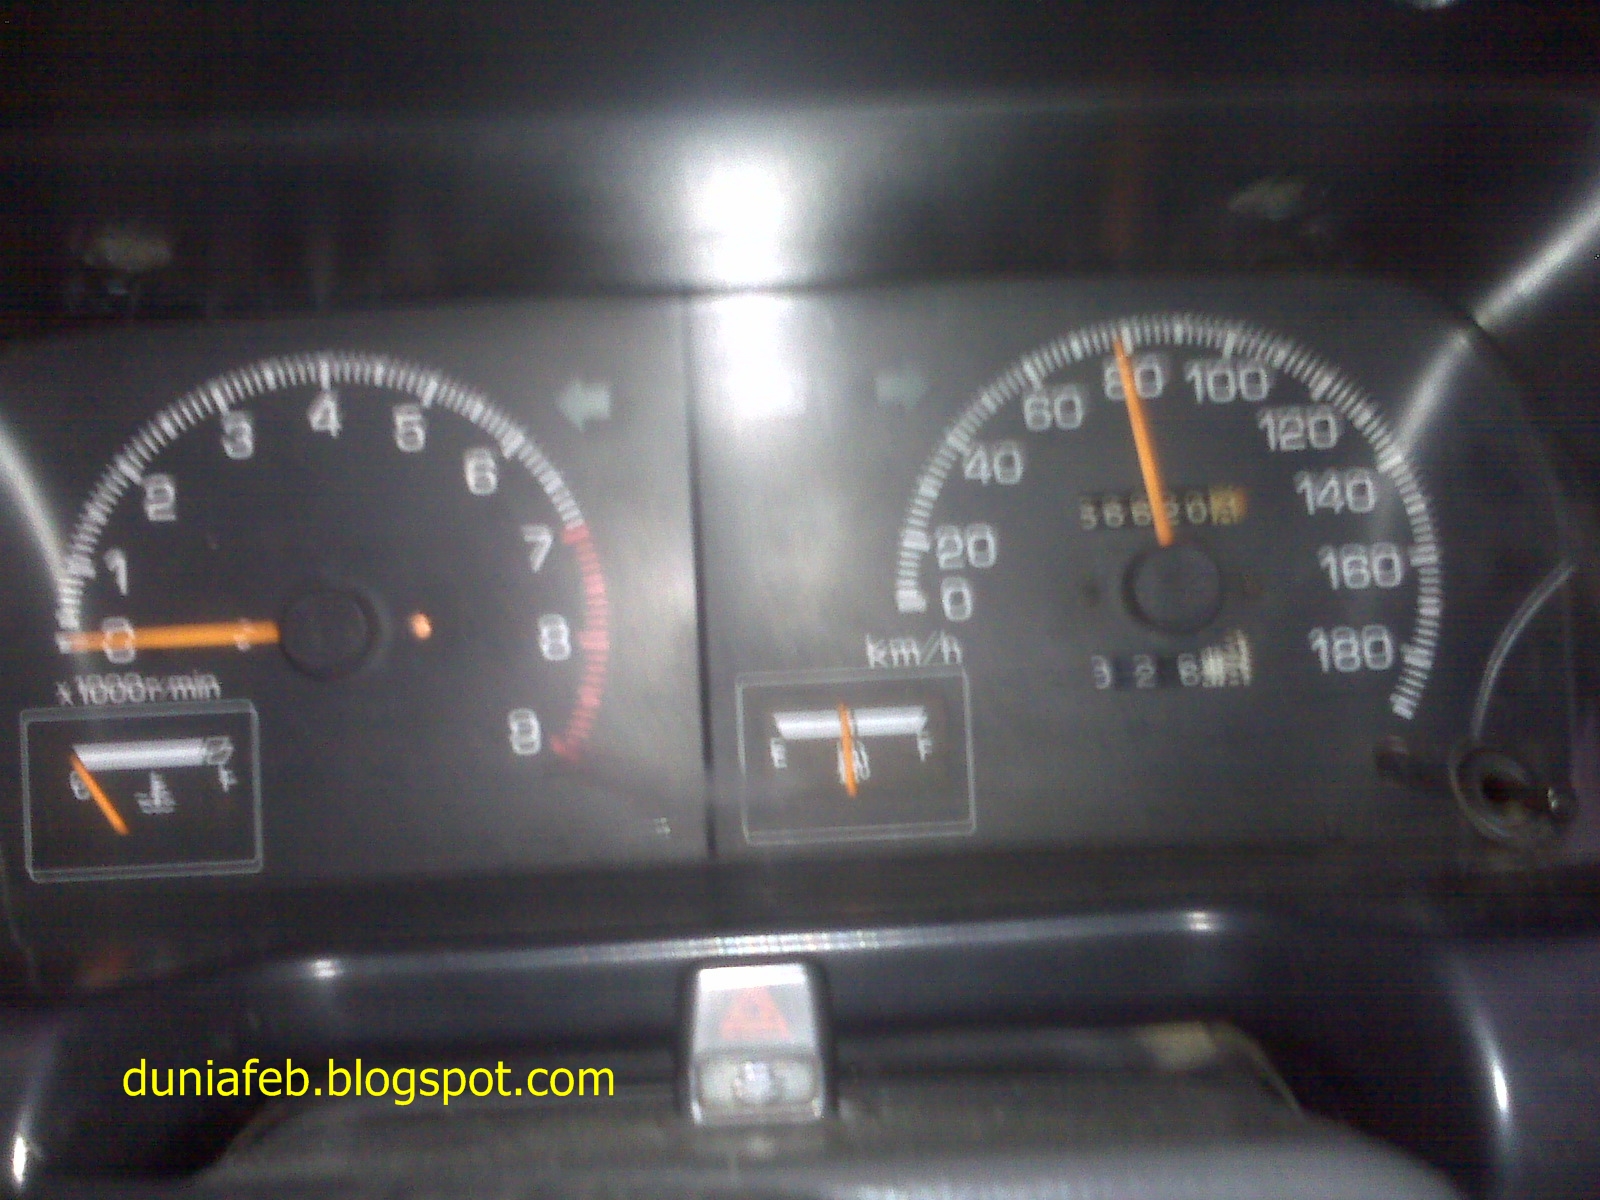 Test Drive Daihatsu Charade Classy SG Saloon DuniaPeb